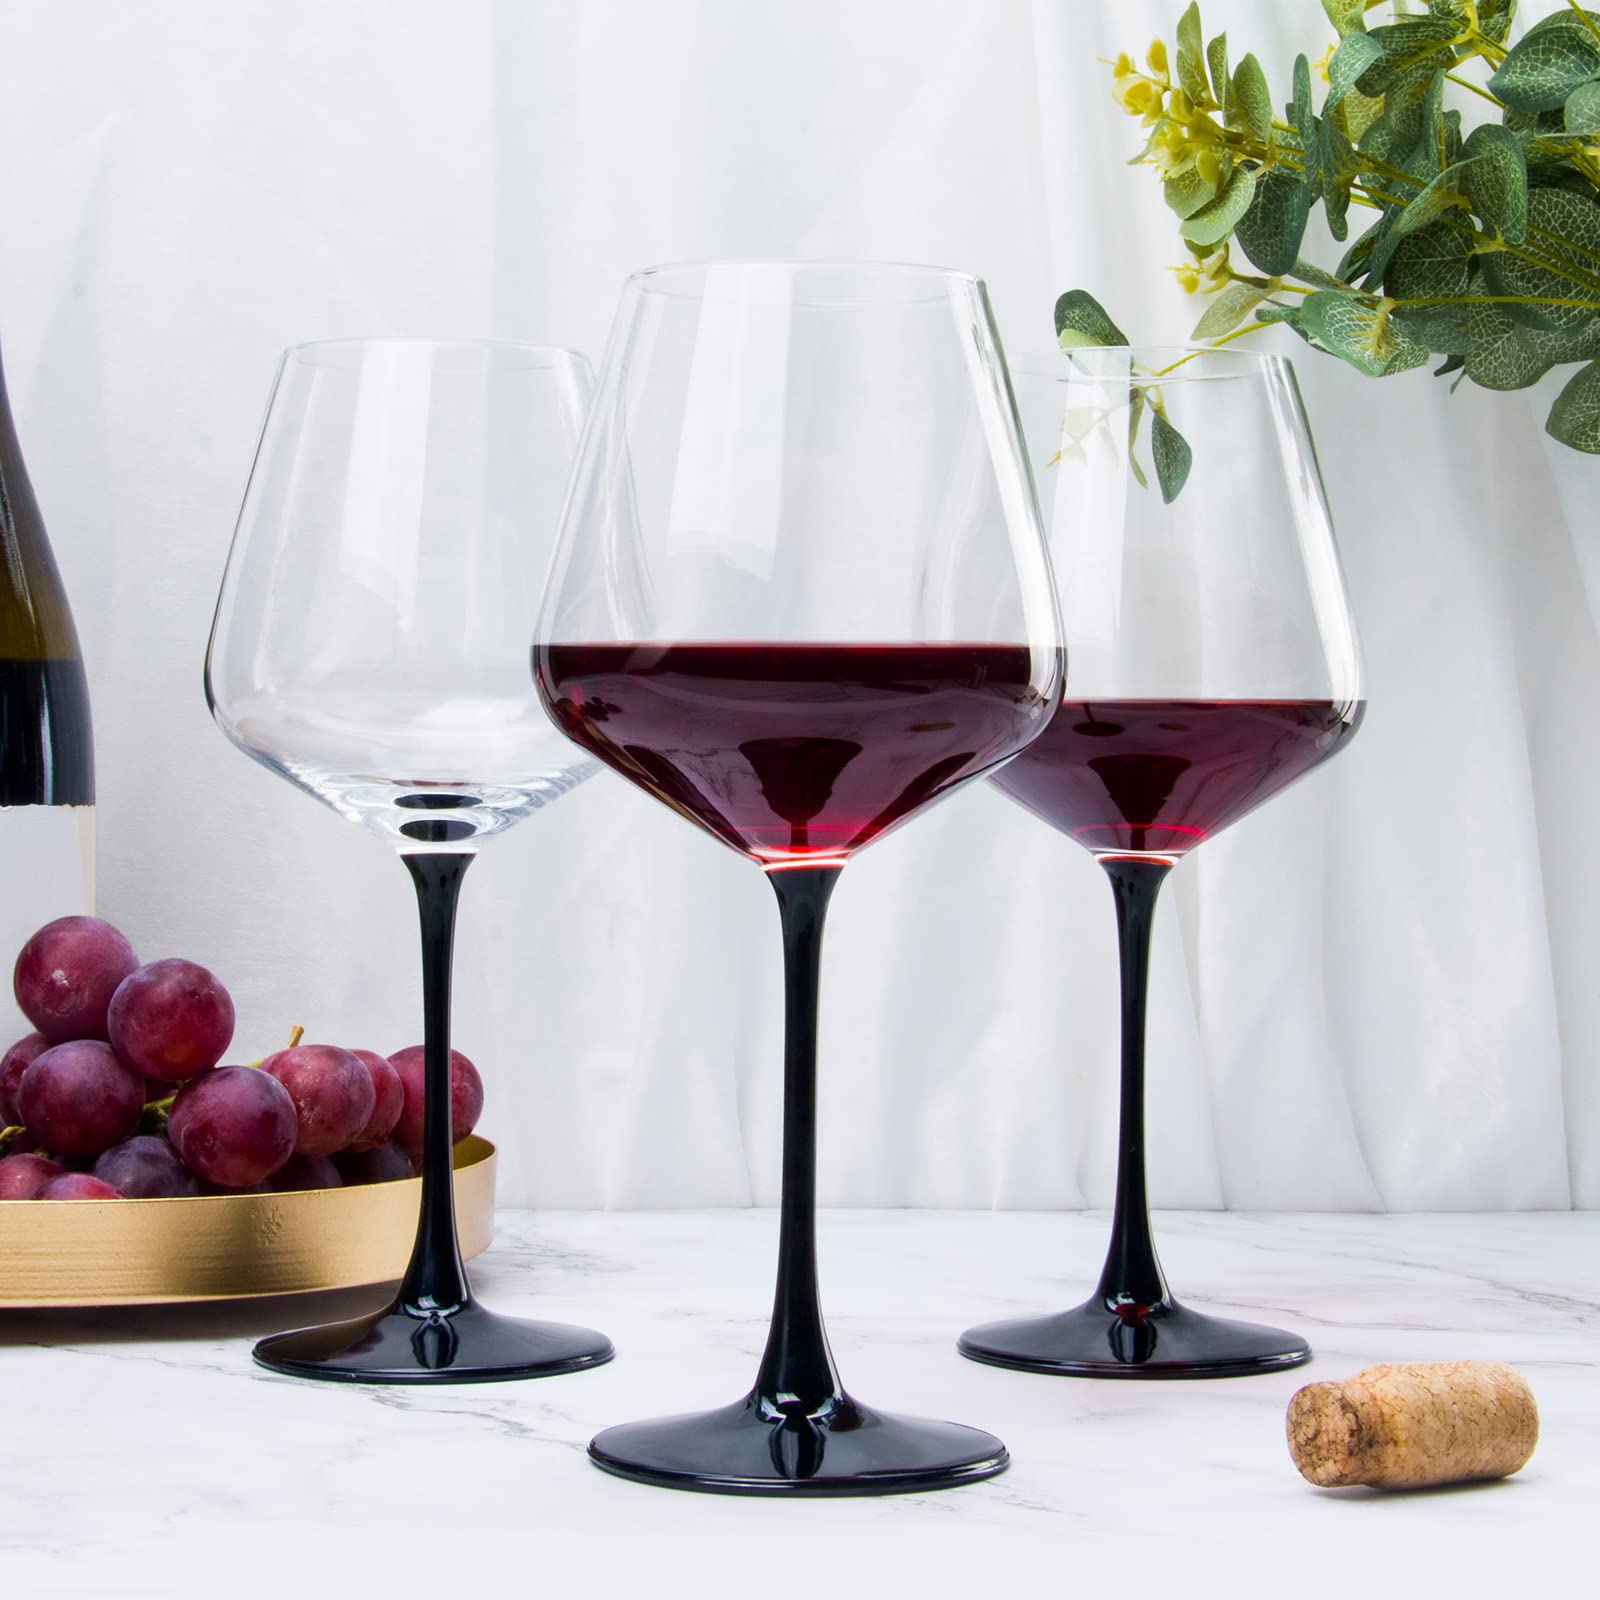 YANGNAY Wine Glasses (Set of 6, 20 Oz), Large Clear Burgundy Wine Glasses  for Red Wine, Smooth Rim, Dishwasher Safe